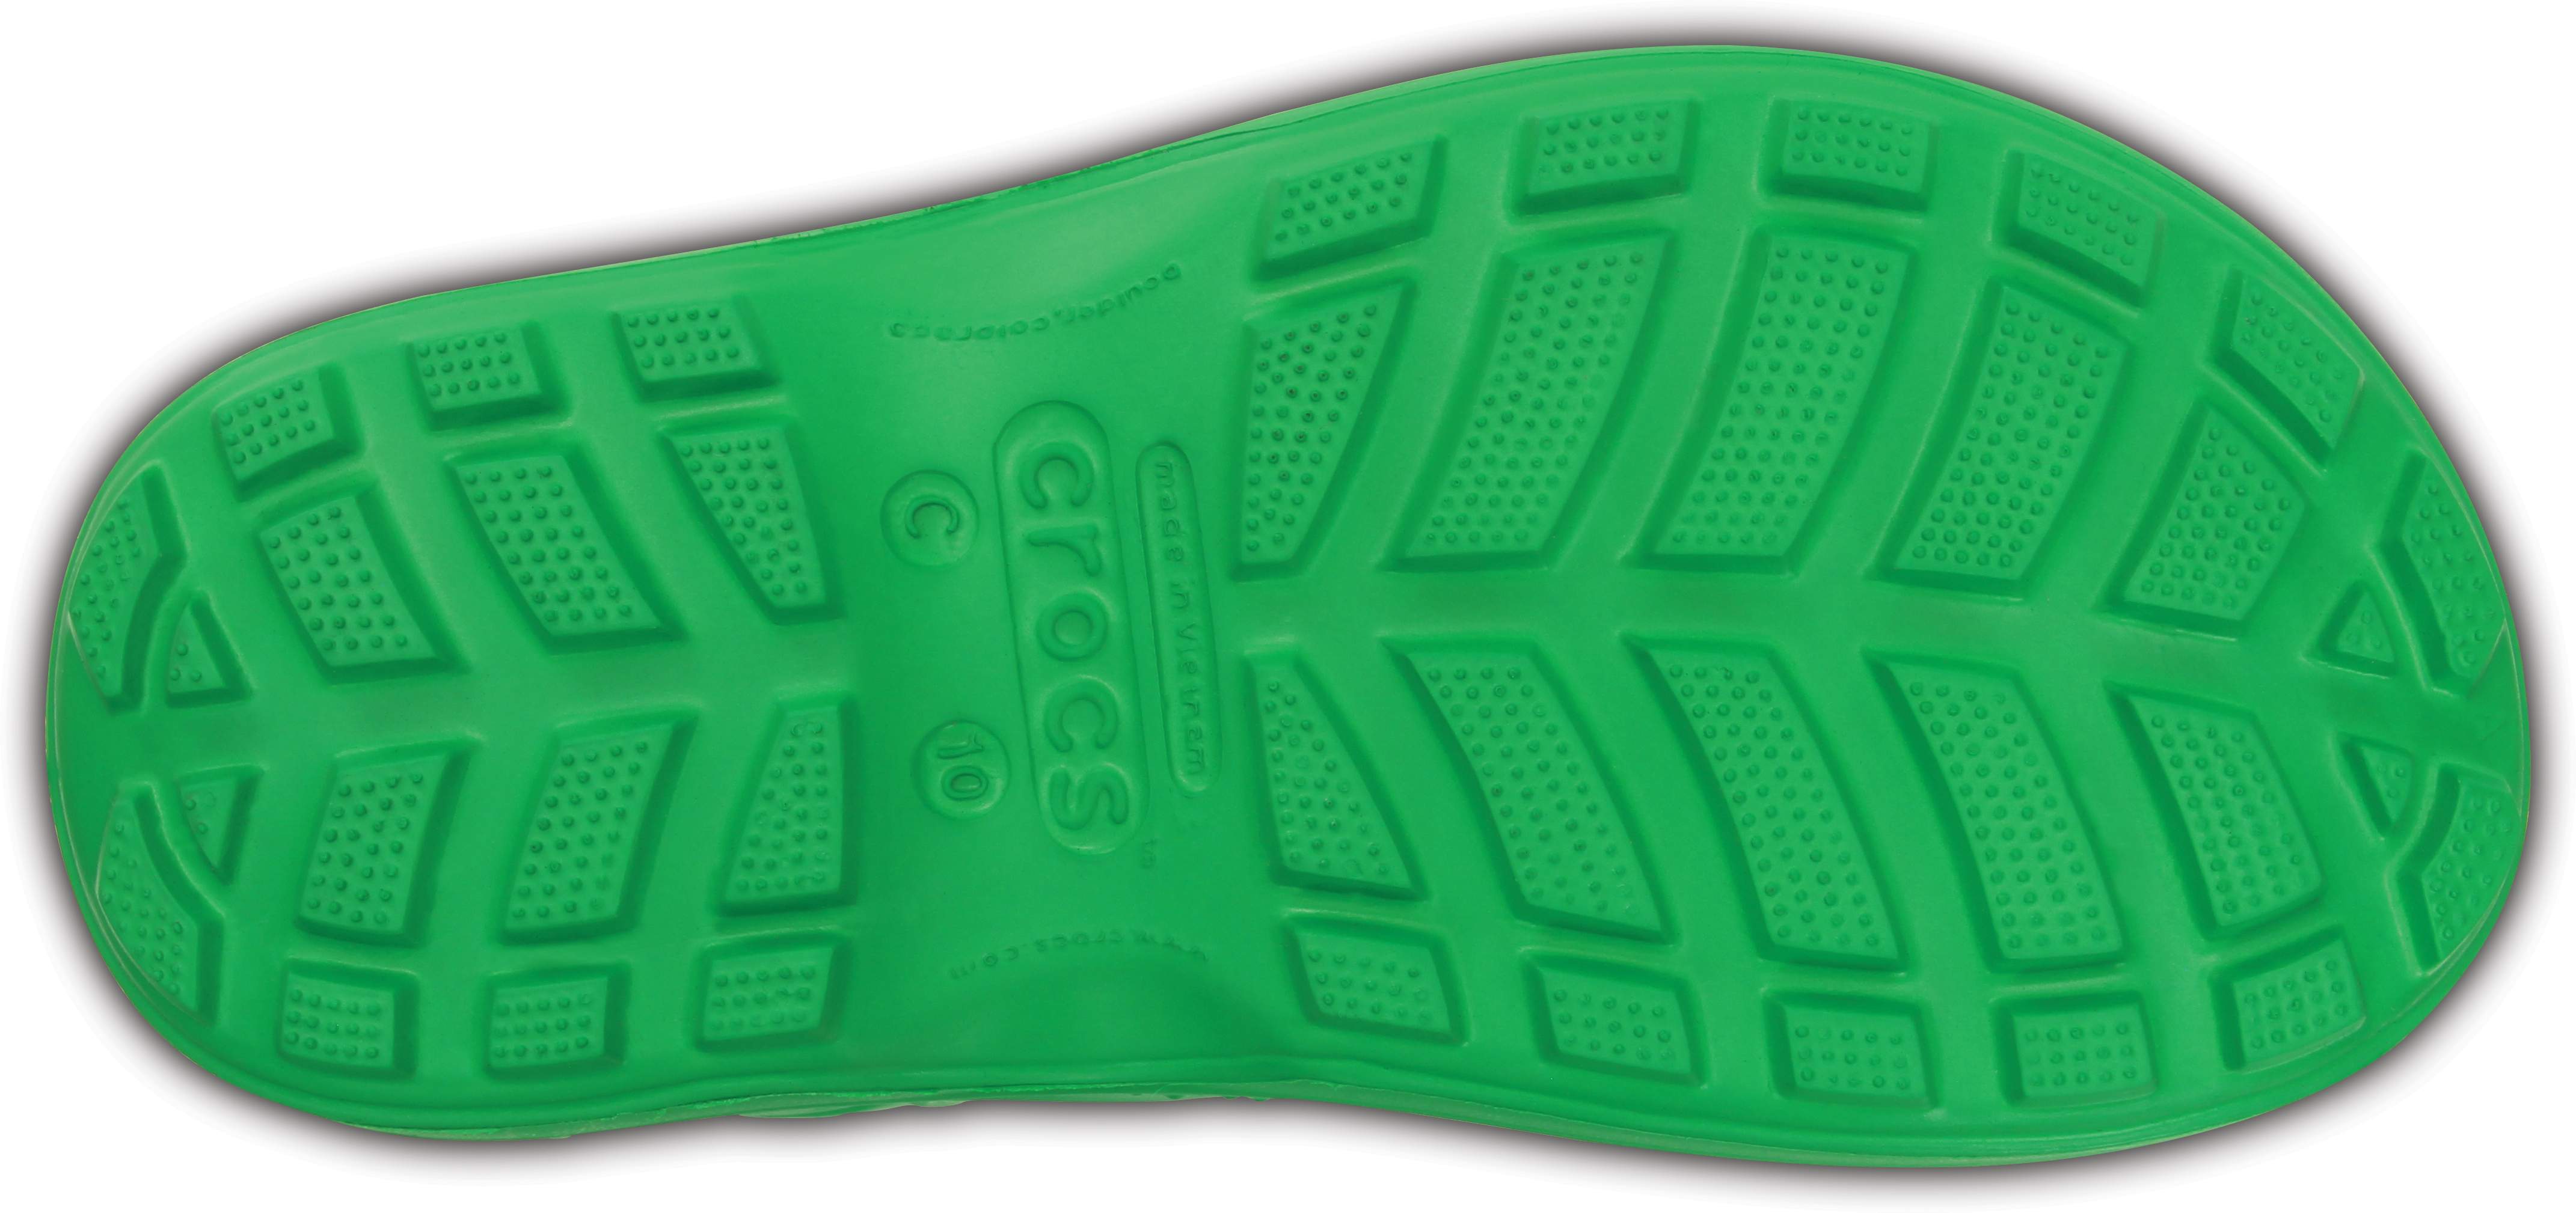 crocs j6 size